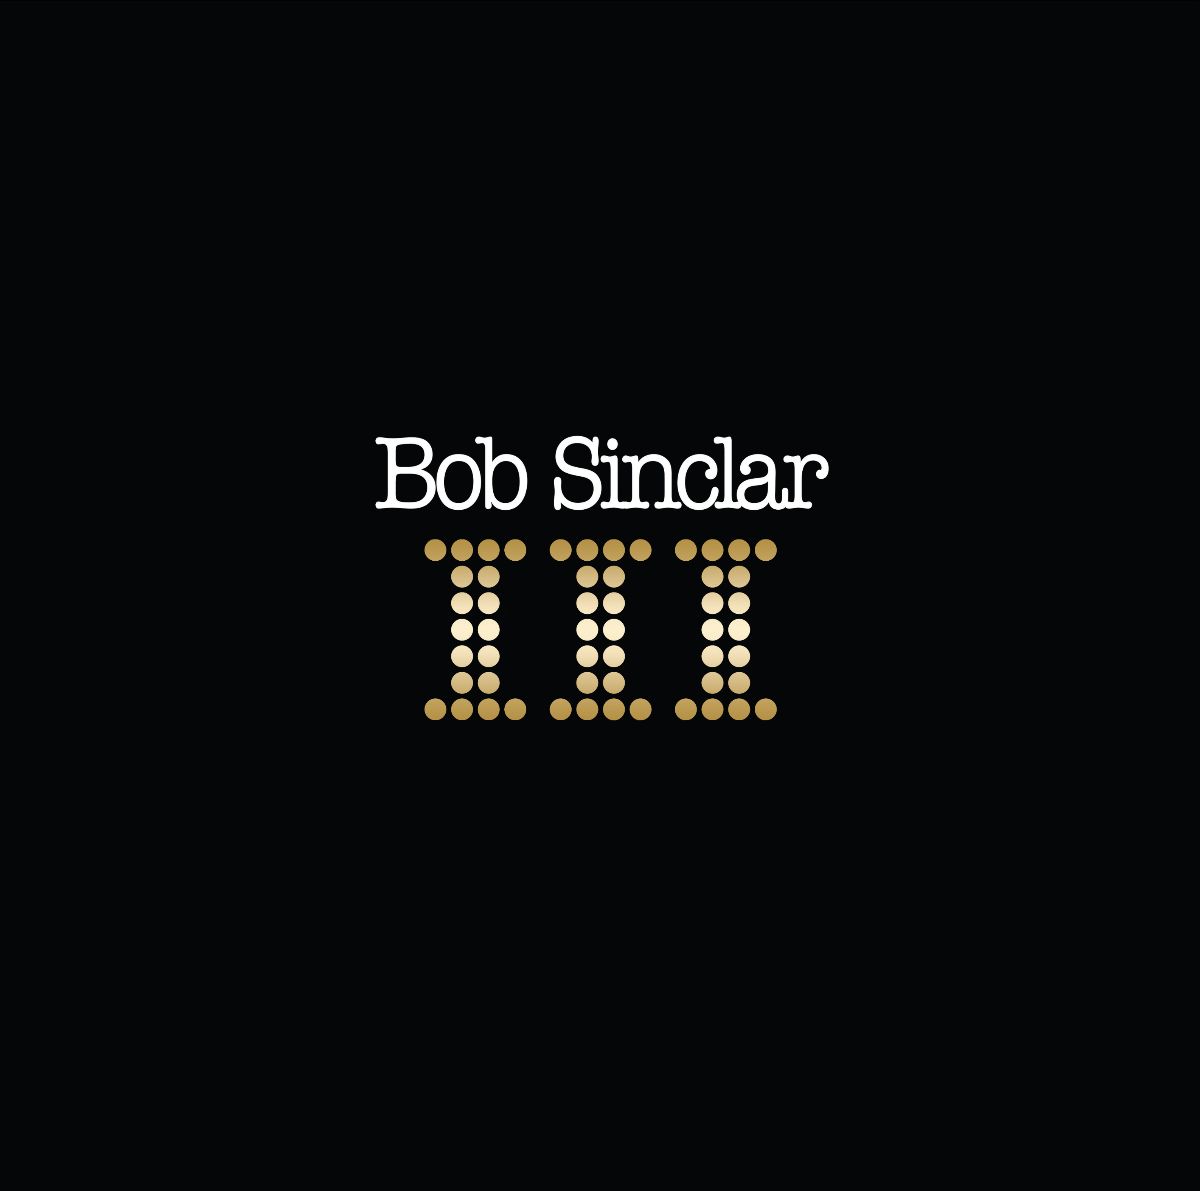 Bob Sinclar - III: Vinyl 2LP